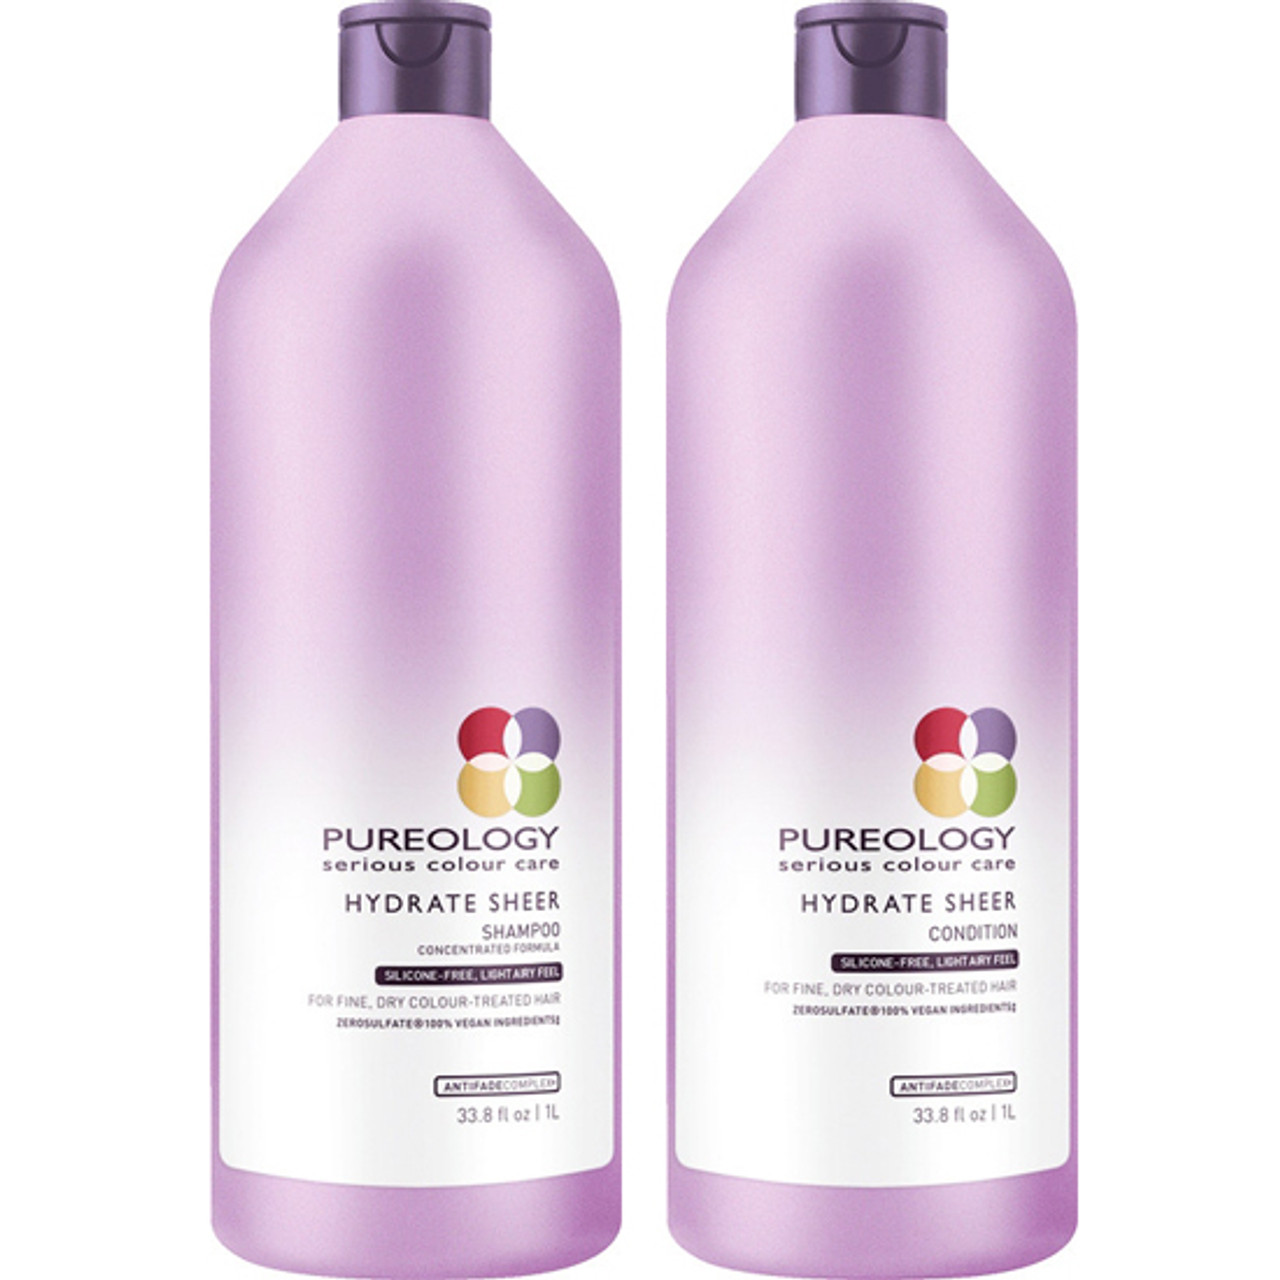 Pureology Hydrate Sheer Shampoo and Duo Beauty Supply